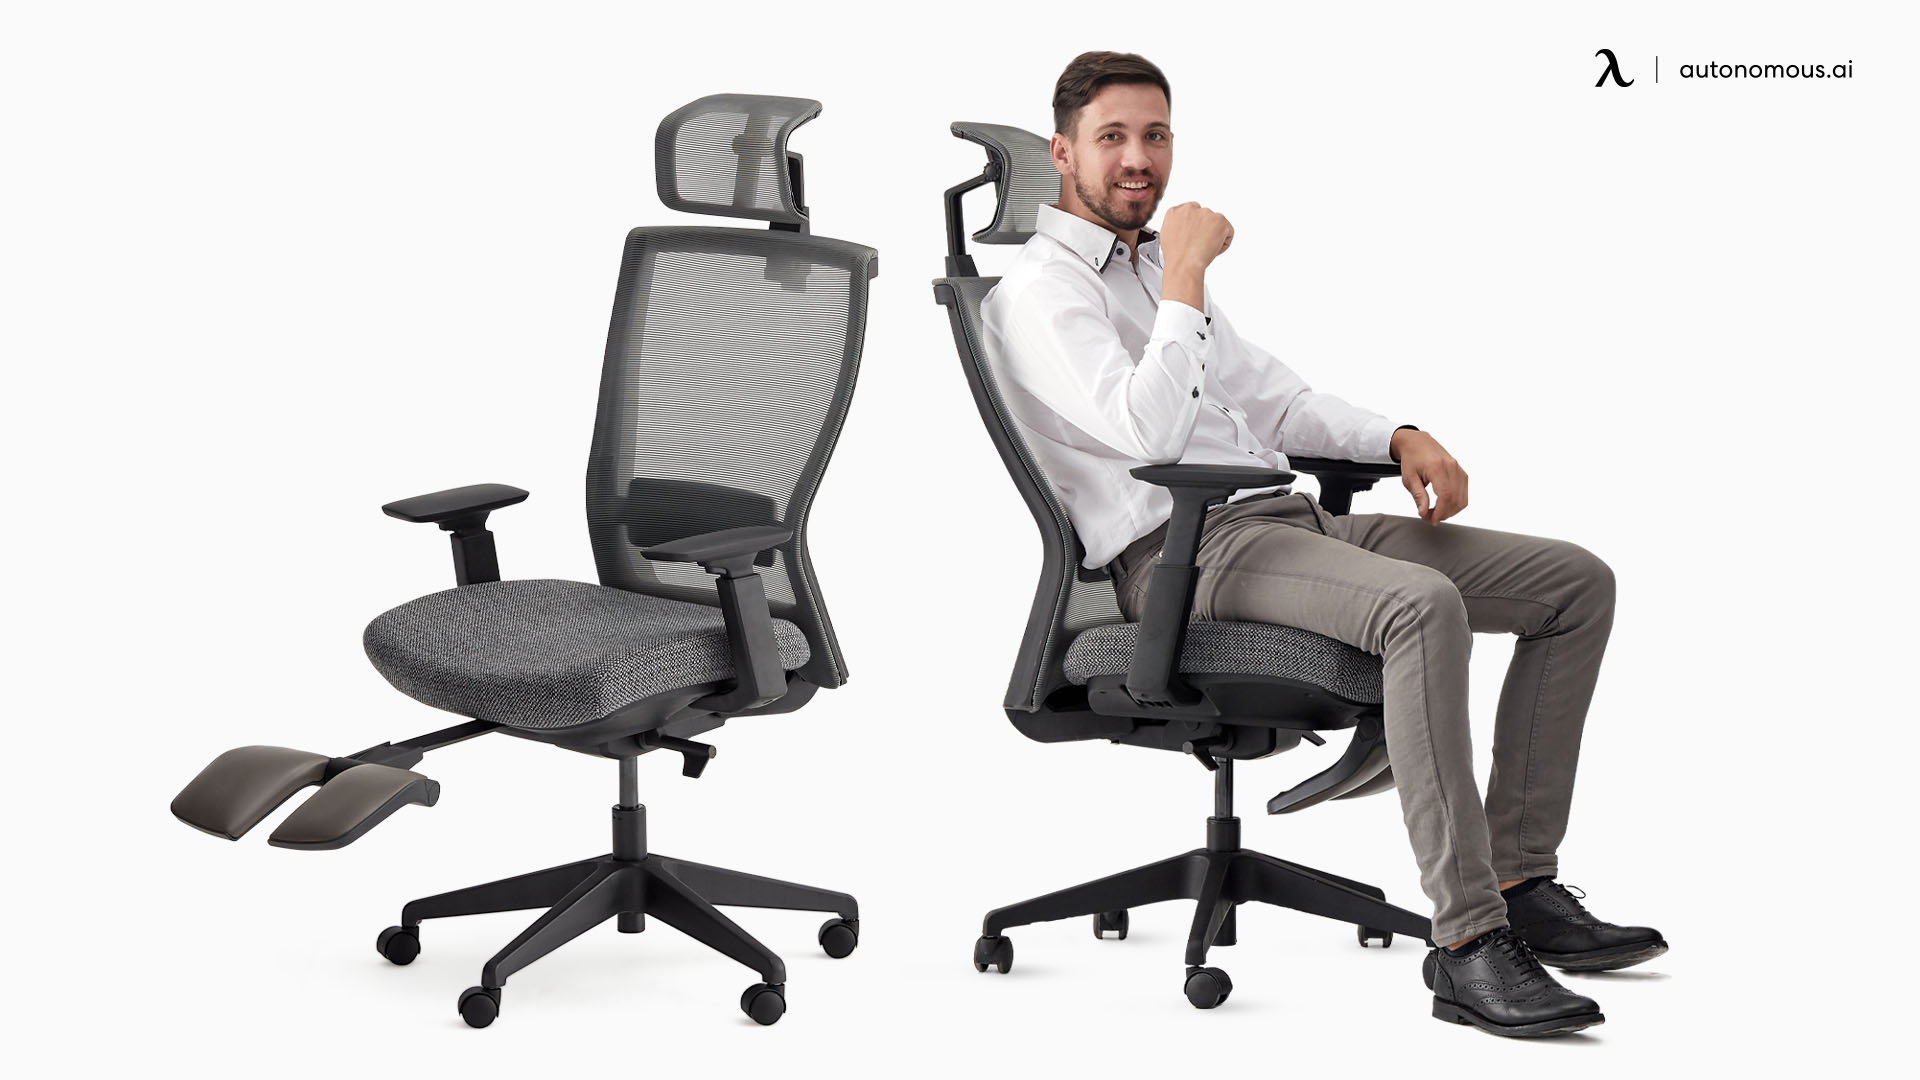 ErgoChair Recline active sitting chairs